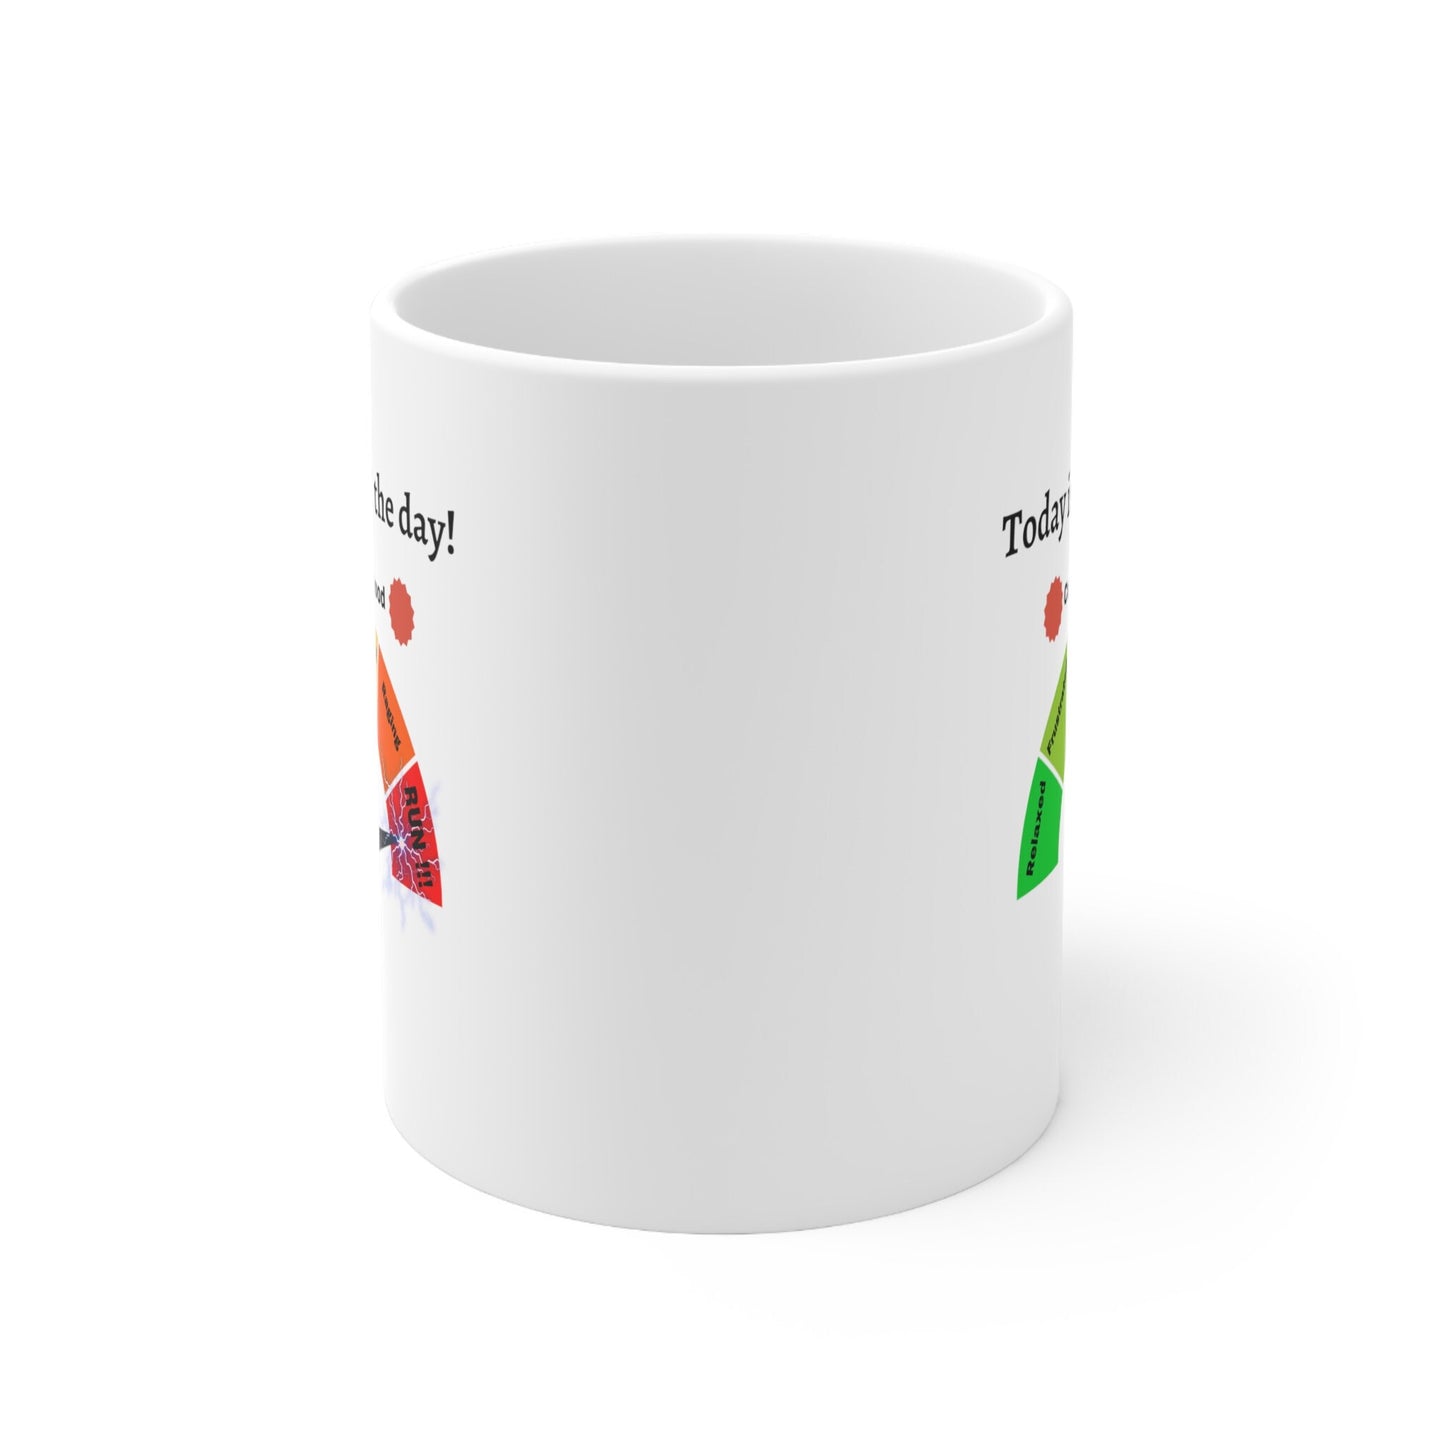 Today is not the day coffee mug, not today mood meter coffee mug, Anger meter coffee mug, not today run coffee mug, Funniest mood saying mug